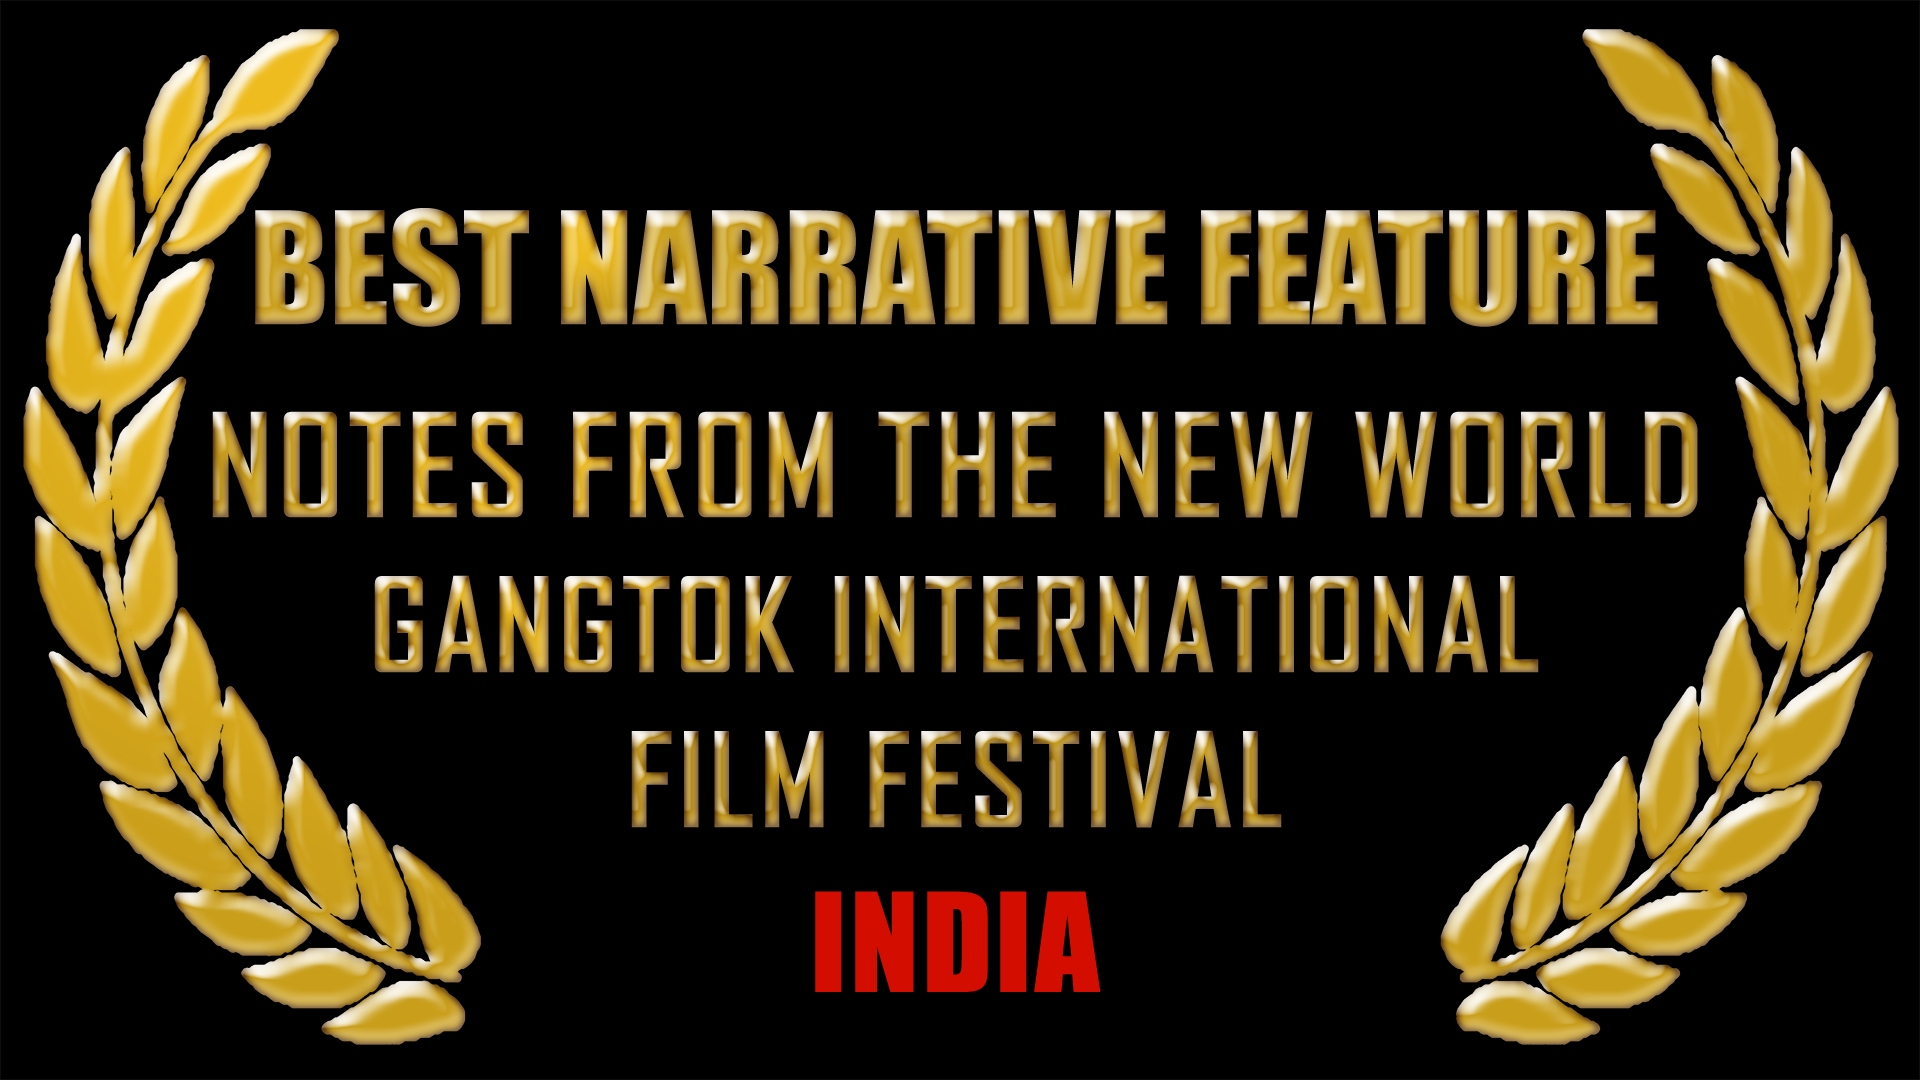 Best Narrative Feature, India